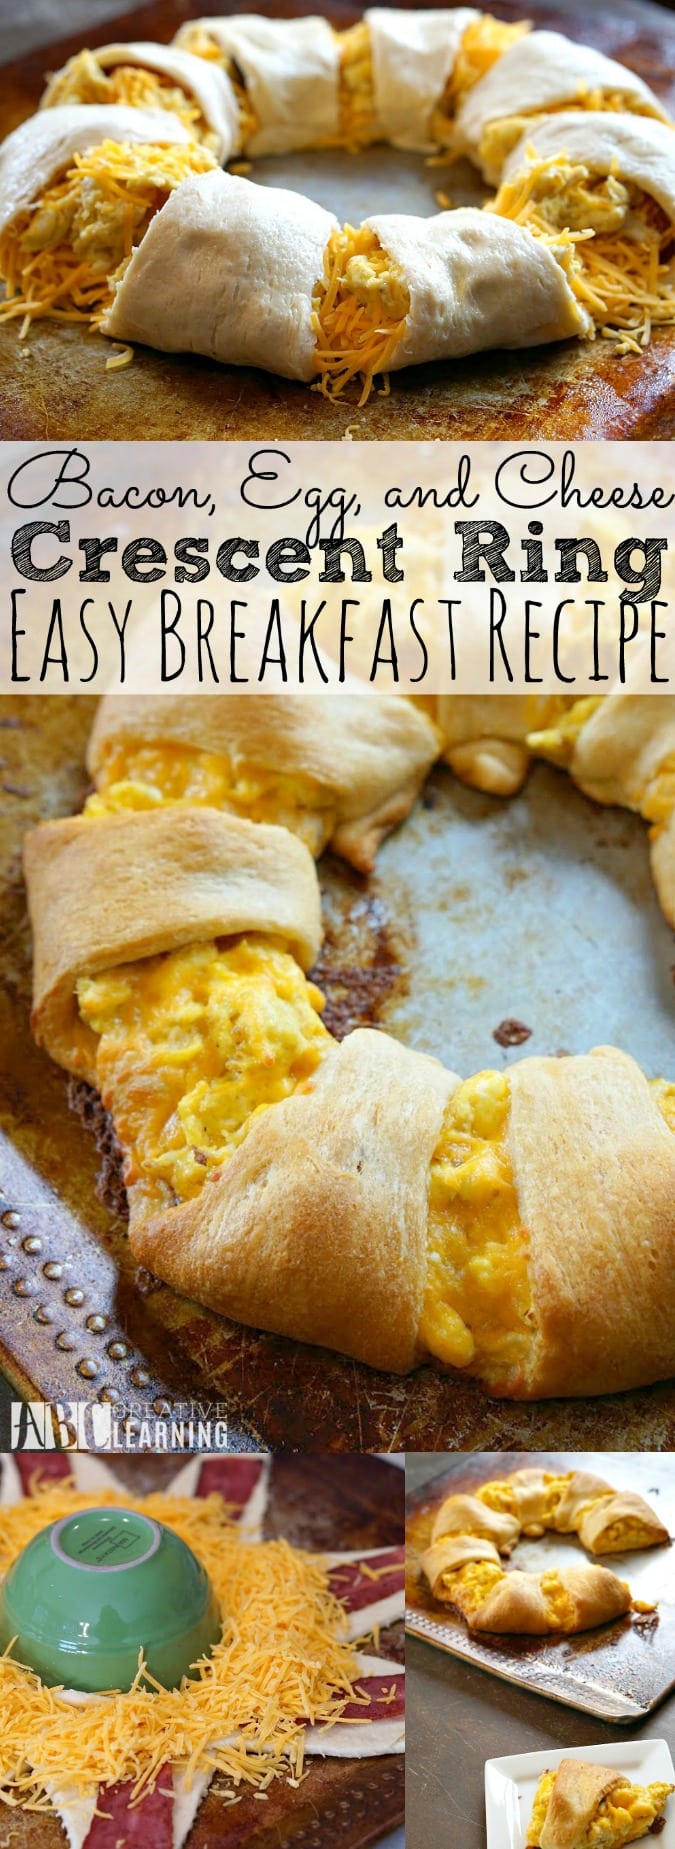 Bacon Egg and Cheese Crescent Ring Recipe - Easy Breakfast Recipe - abccreativelearning.com